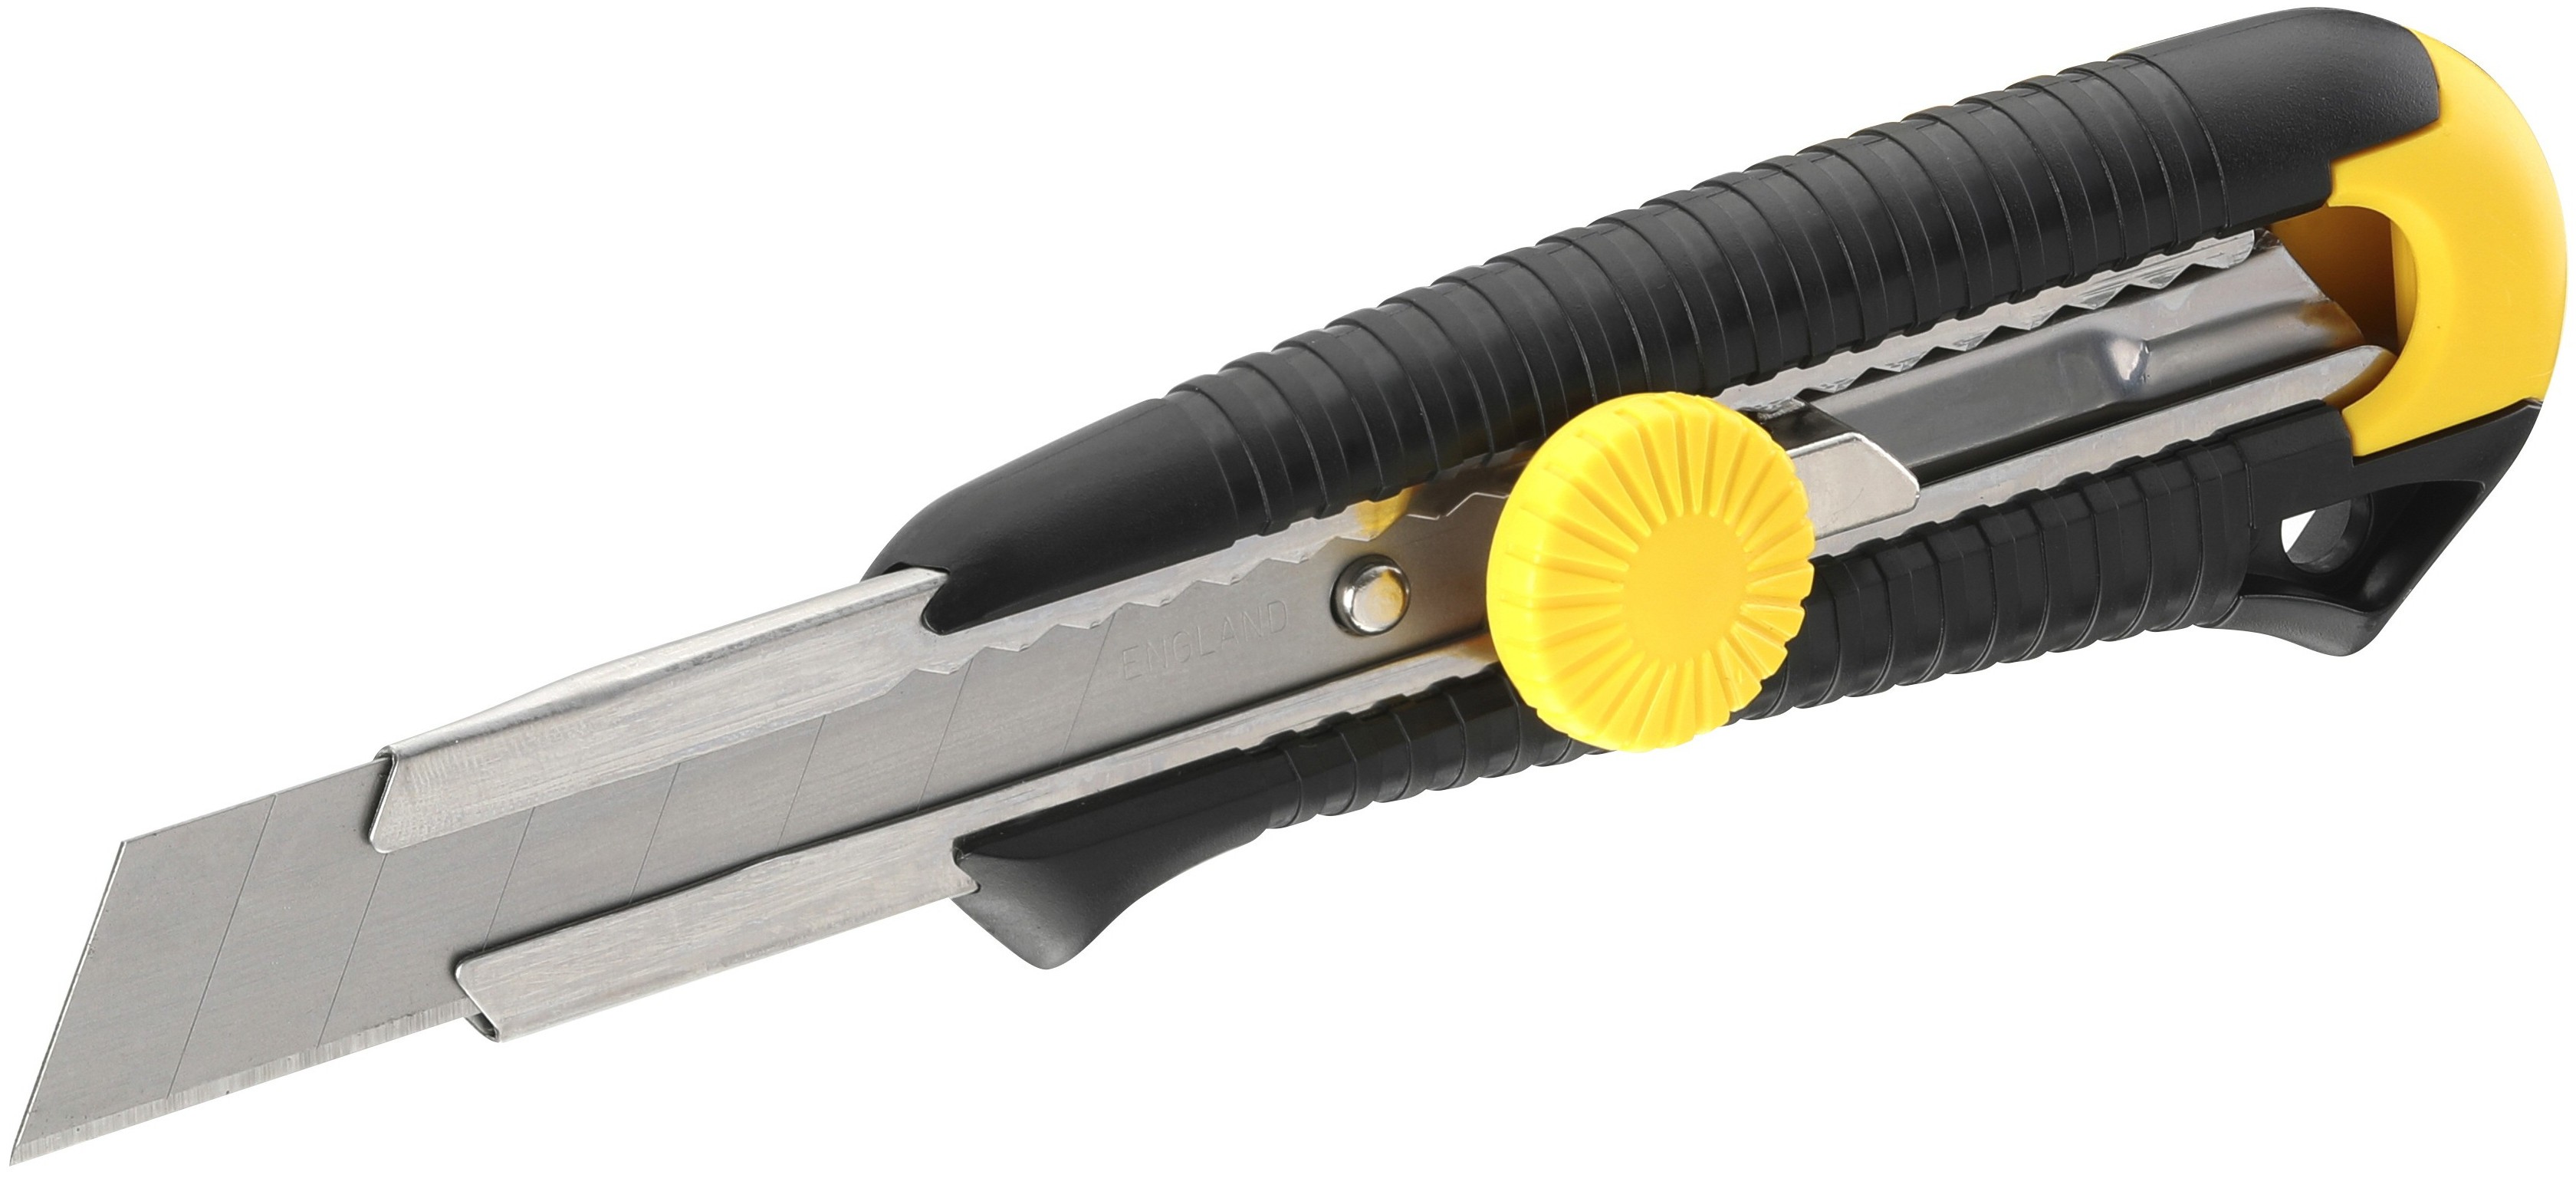 Нож с сегментированным лезвием 18 мм STANLEY DynaGrip MPO 0-10-418 - фото